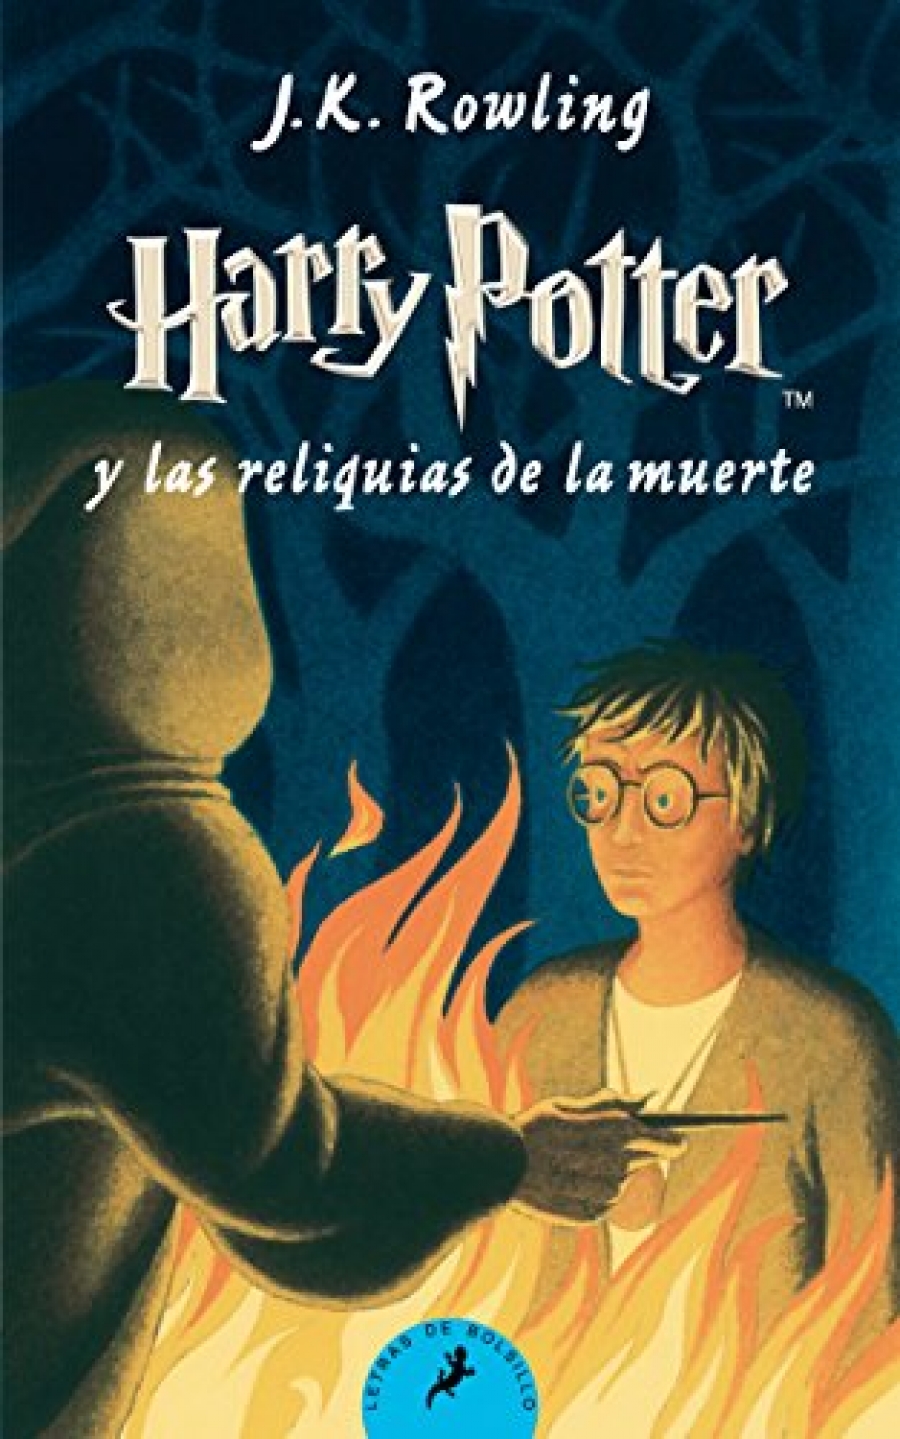 Rowling J.K. Harry Potter y Las Reliquias de la Muerte 